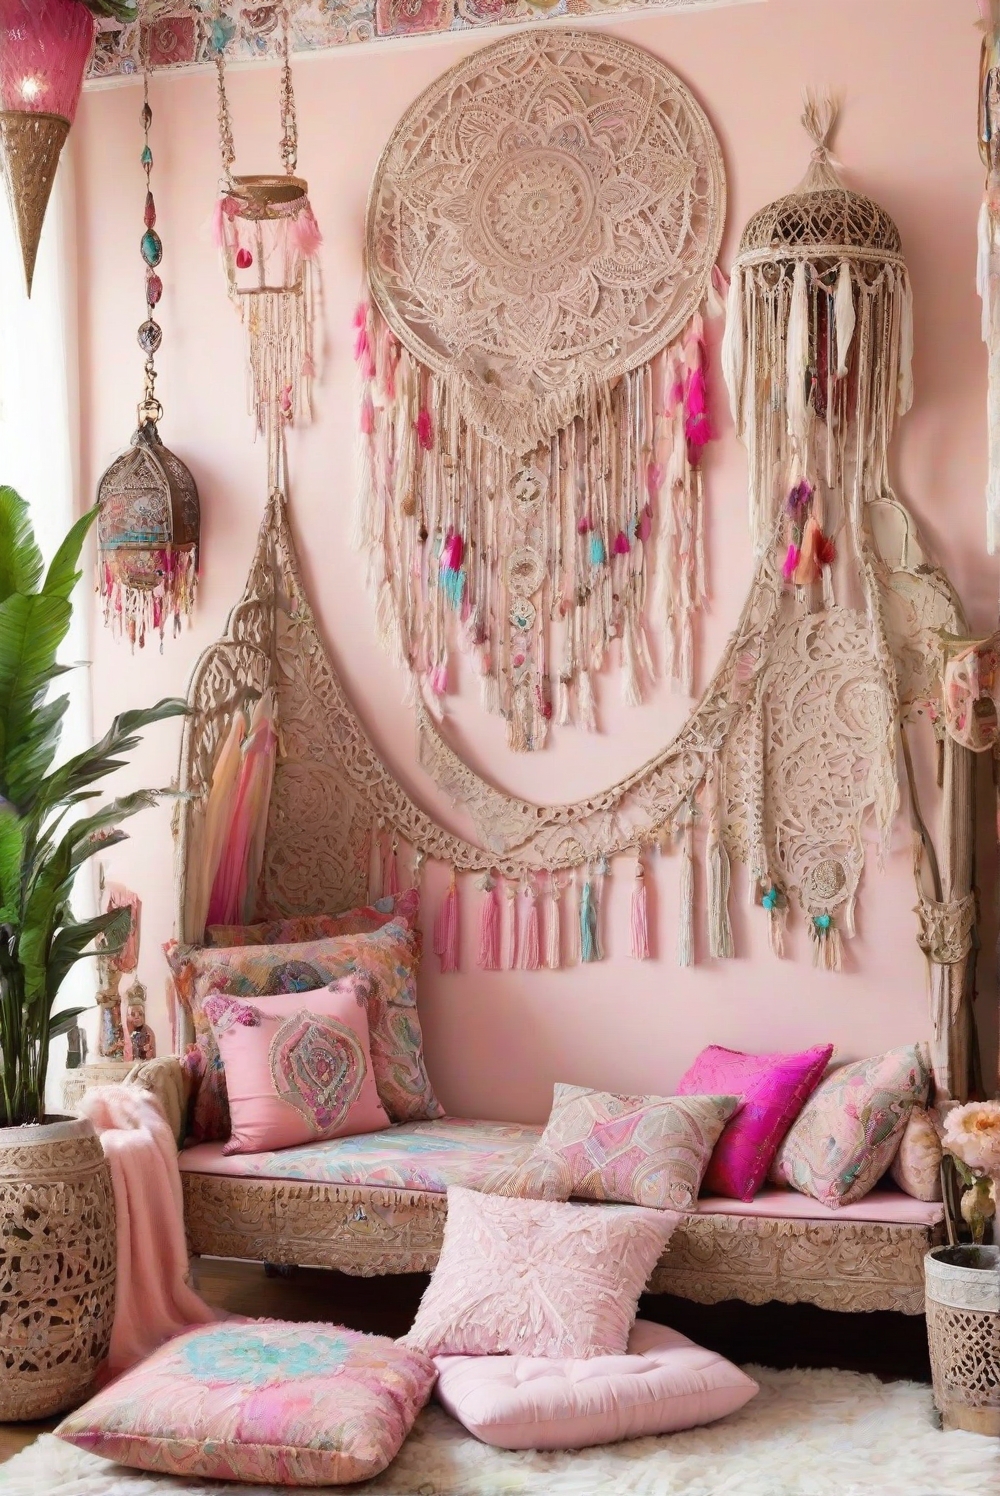 feminine decor, chic home accessories, bohemian style, glamorous interior design, pink velvet furniture, floral wallpaper, luxury bedroom decor